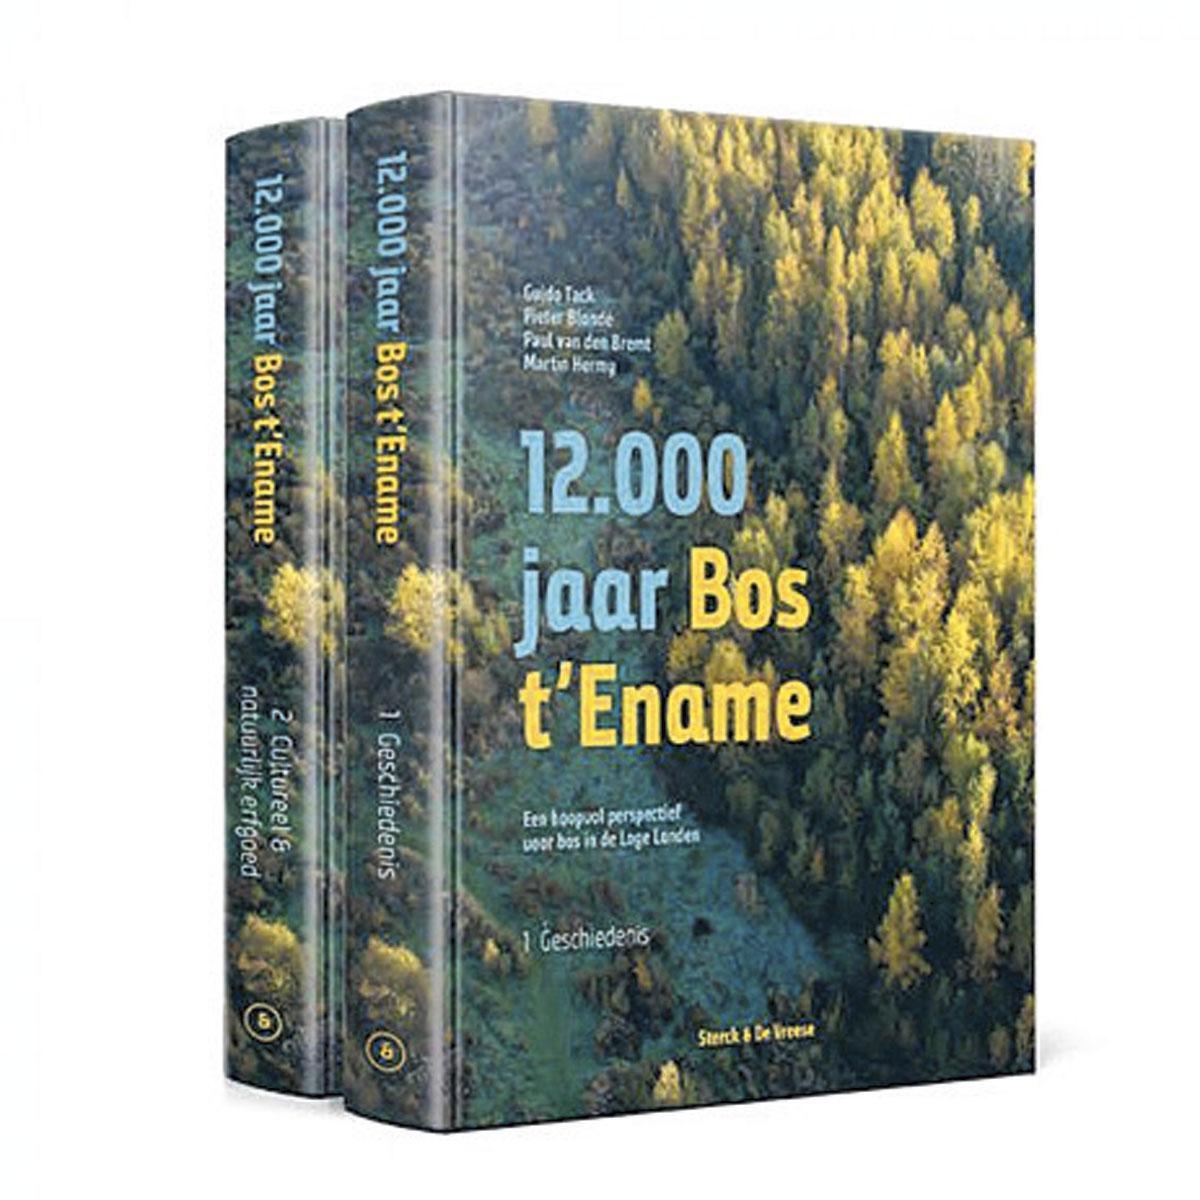 12.000 jaar Bos t'Ename, Guido Tack, Pieter Blondé, Martin Hermy en Paul van den Bremt, Sterck & De Vreese, 864 blz, €89,95